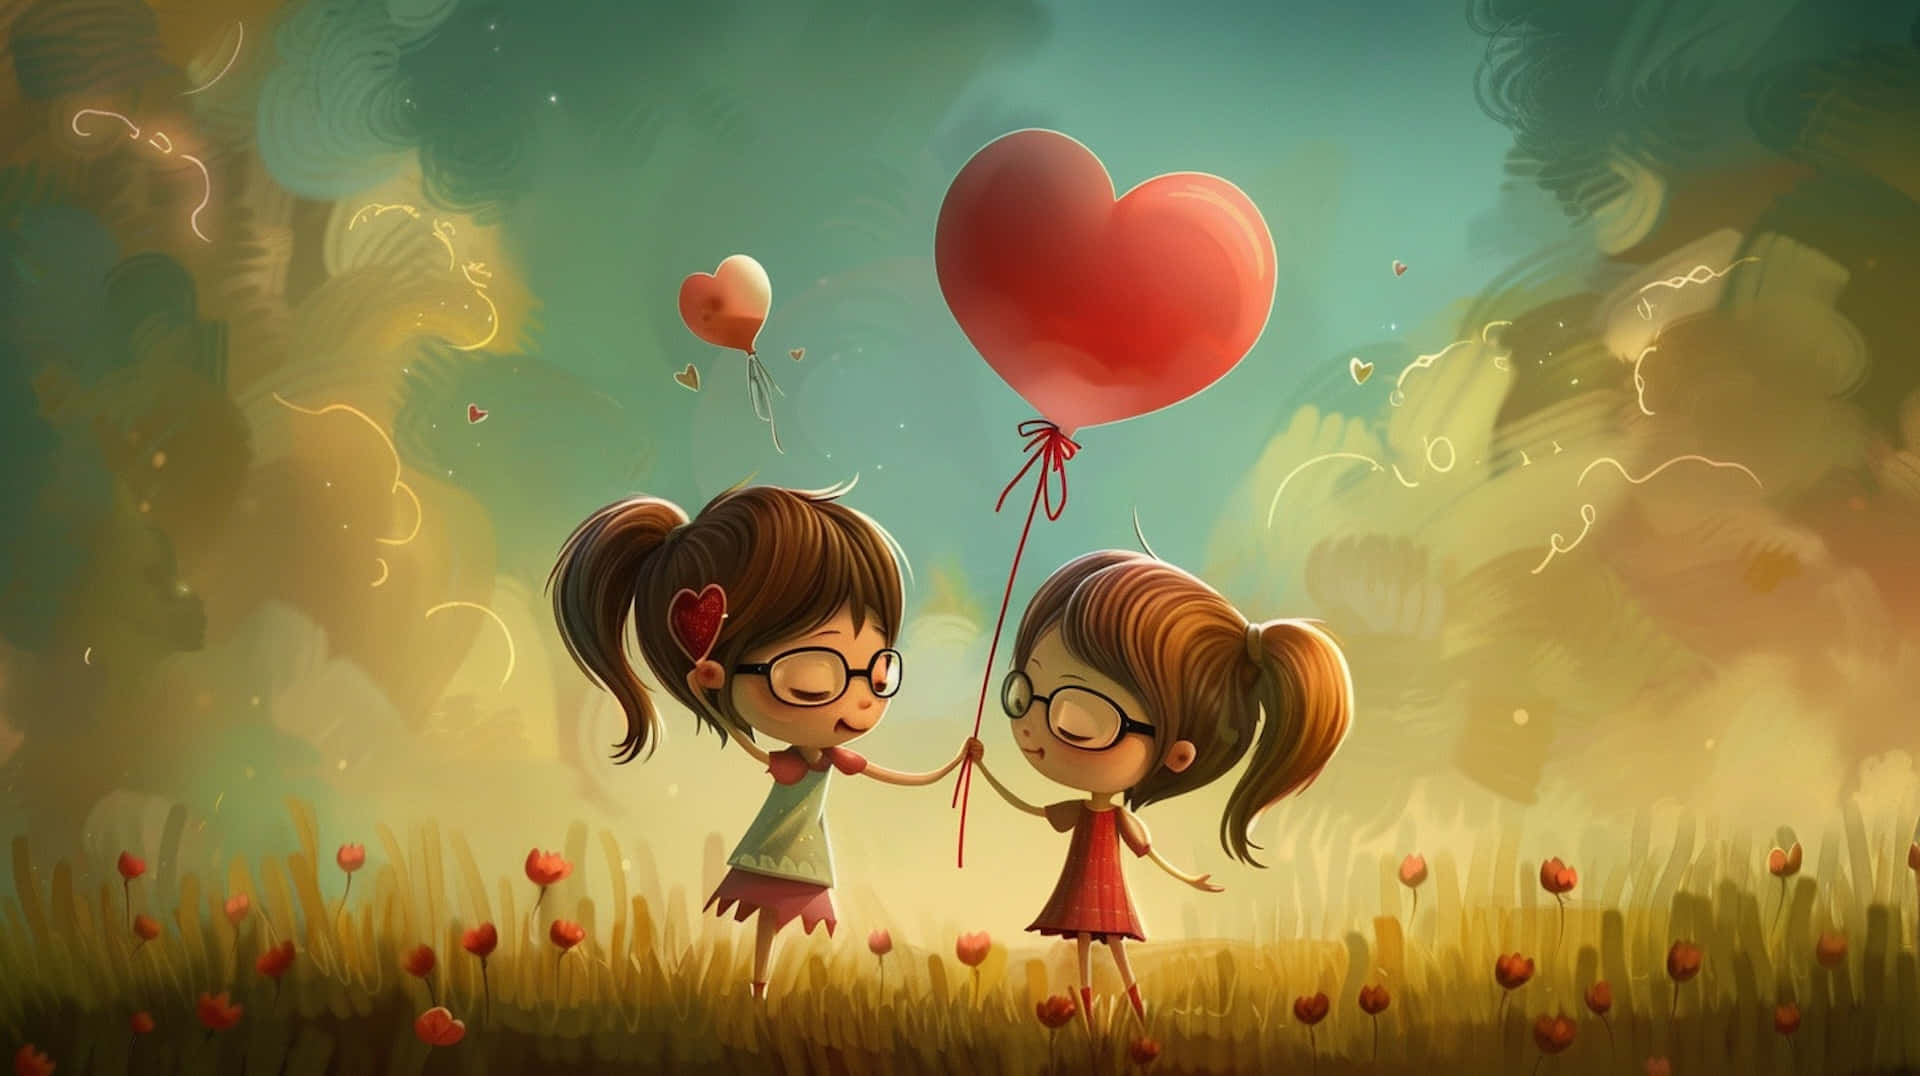 Heartwarming Friends With Balloon Wallpaper